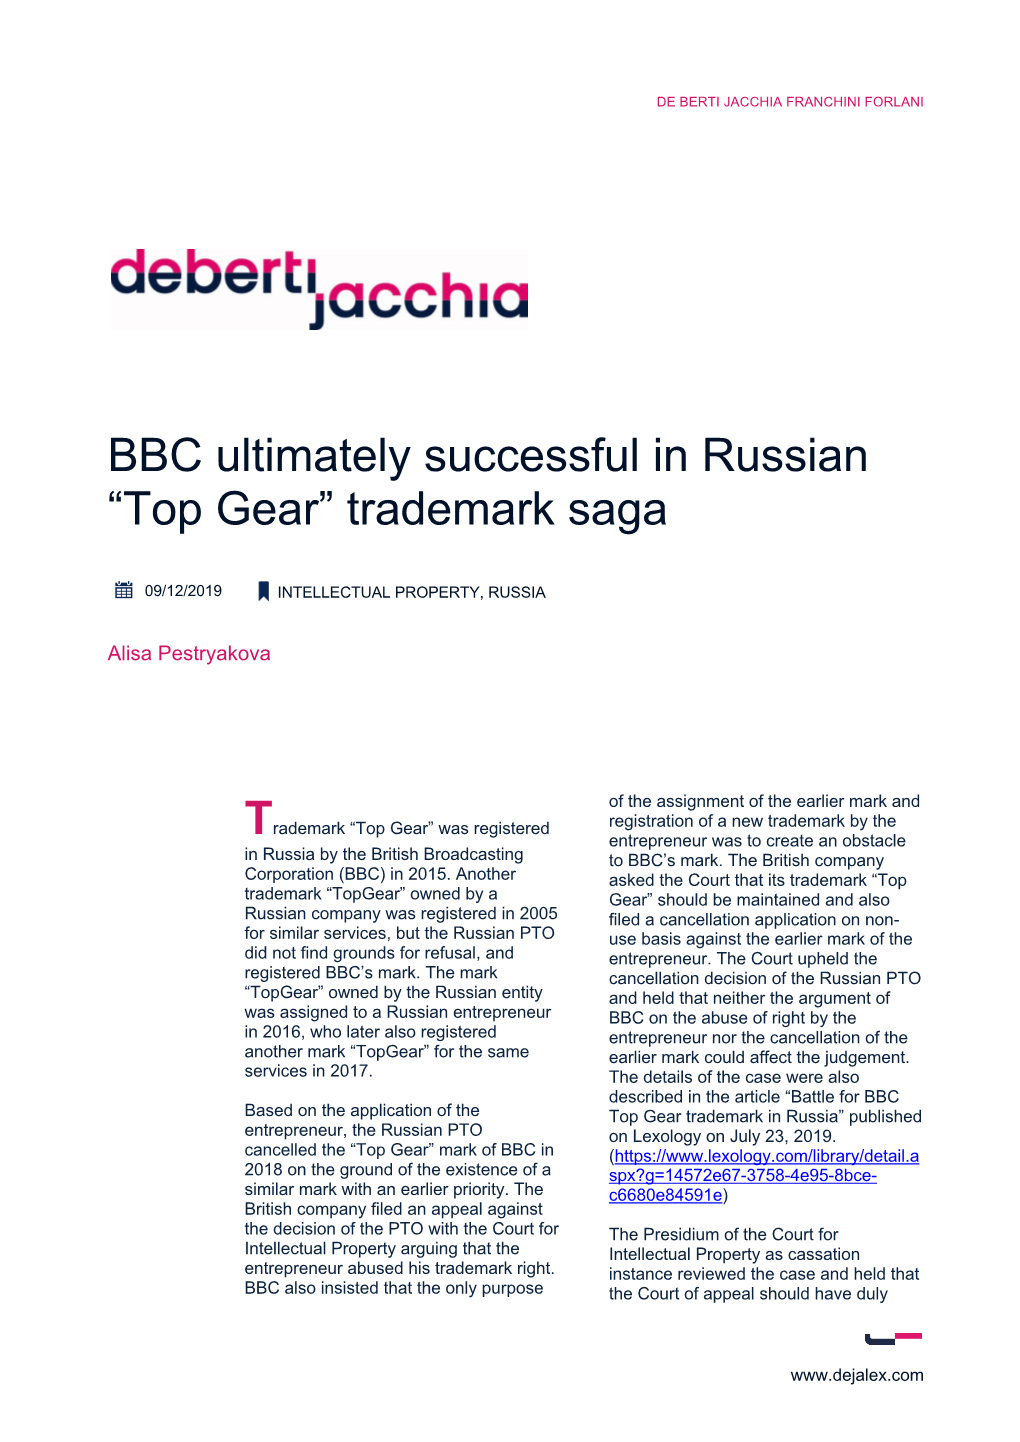 BBC Ultimately Successful in Russian “Top Gear” Trademark Saga